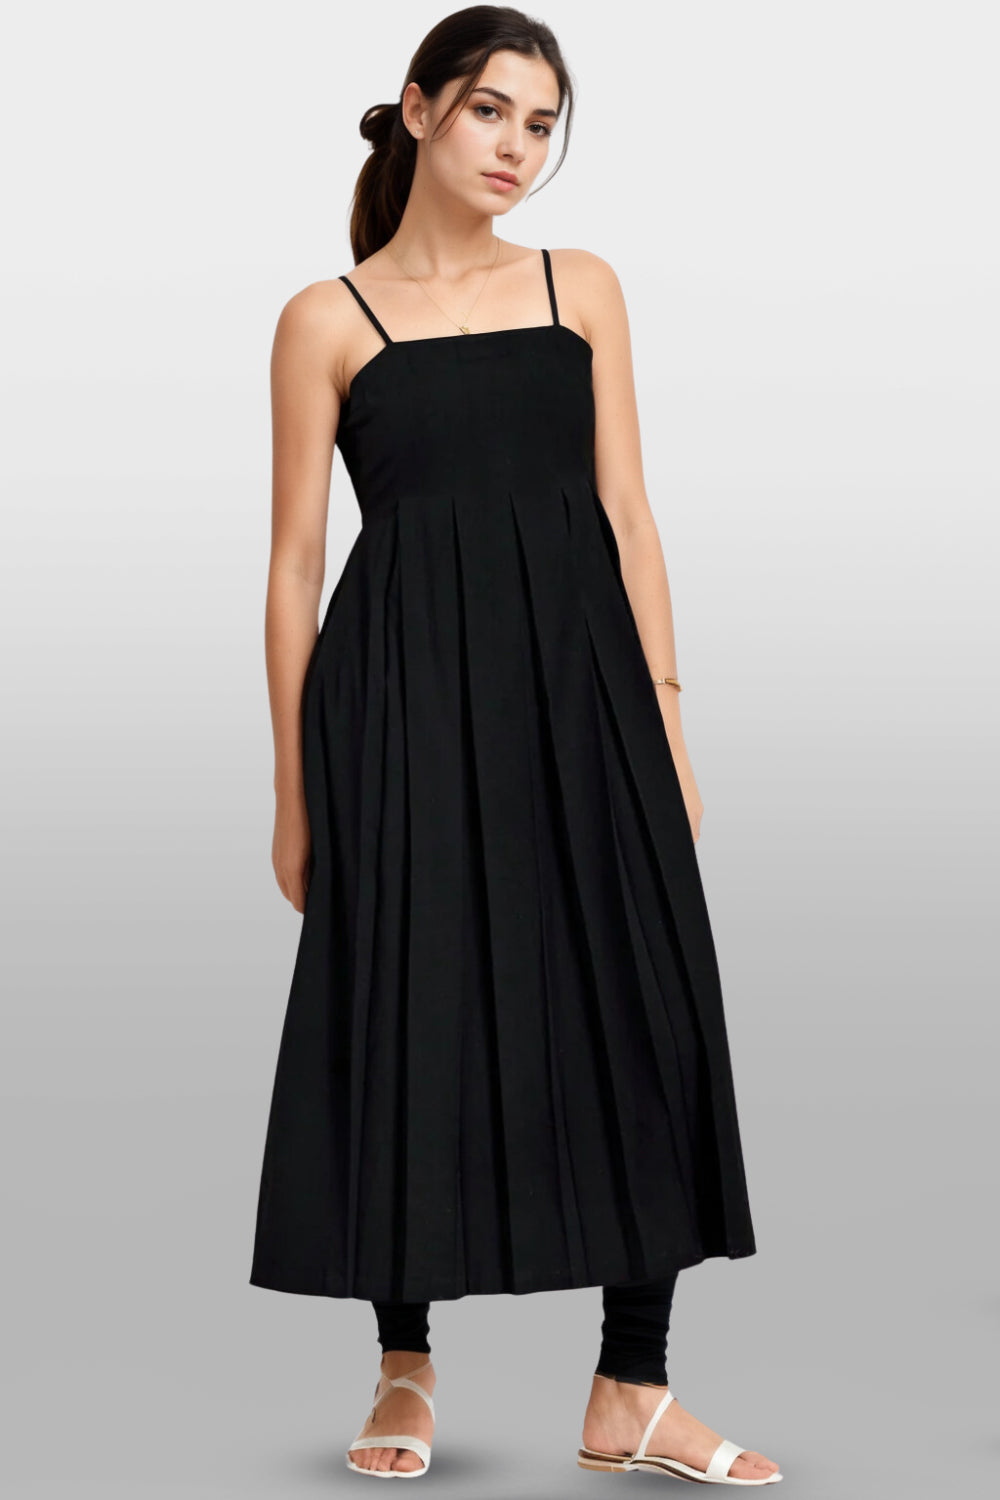 Kitchener Black Dress